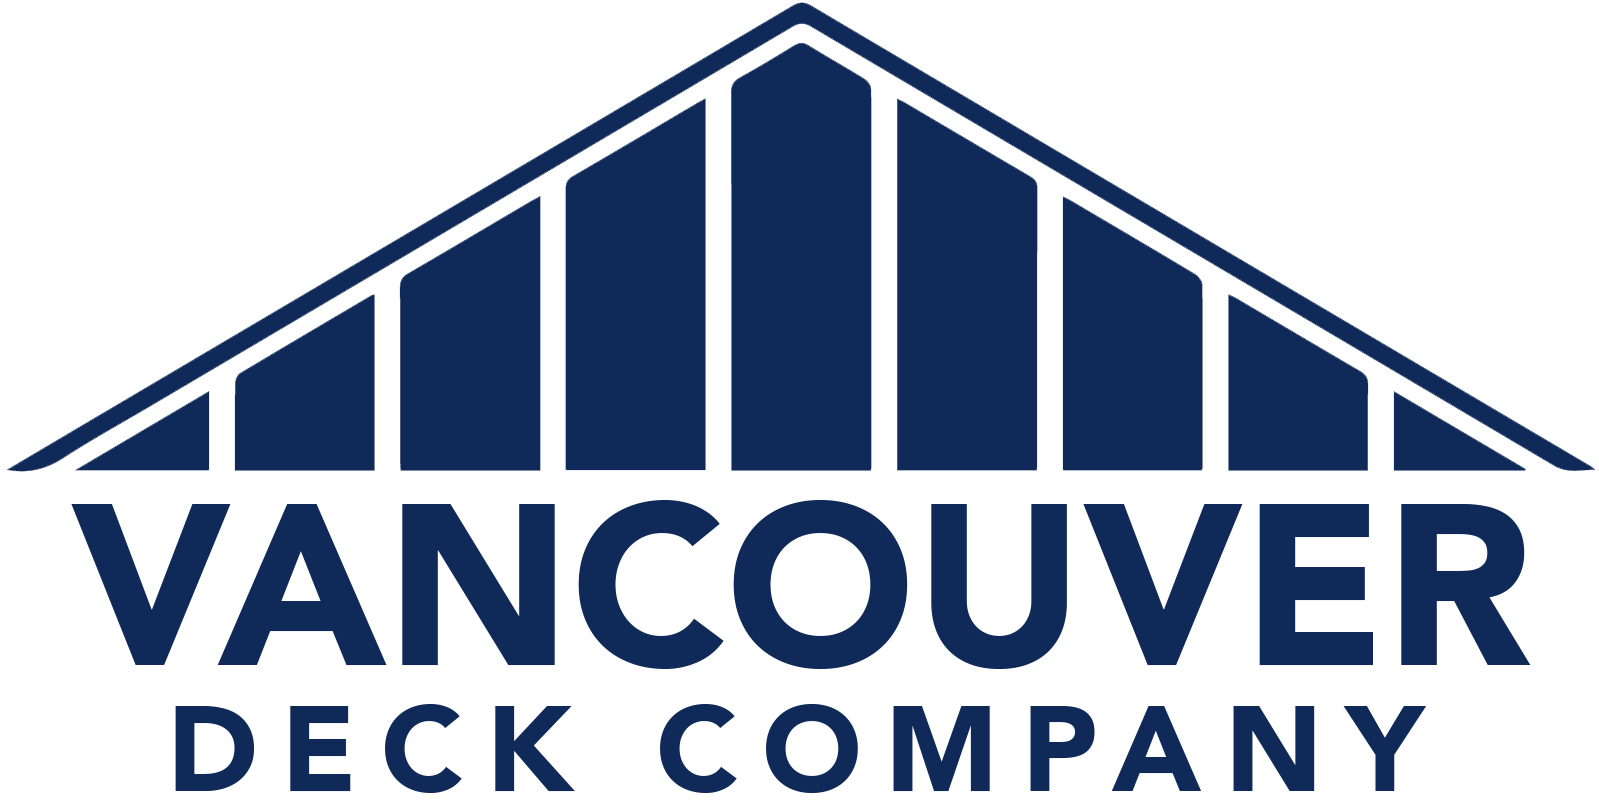 Vancouver Deck Company Logo